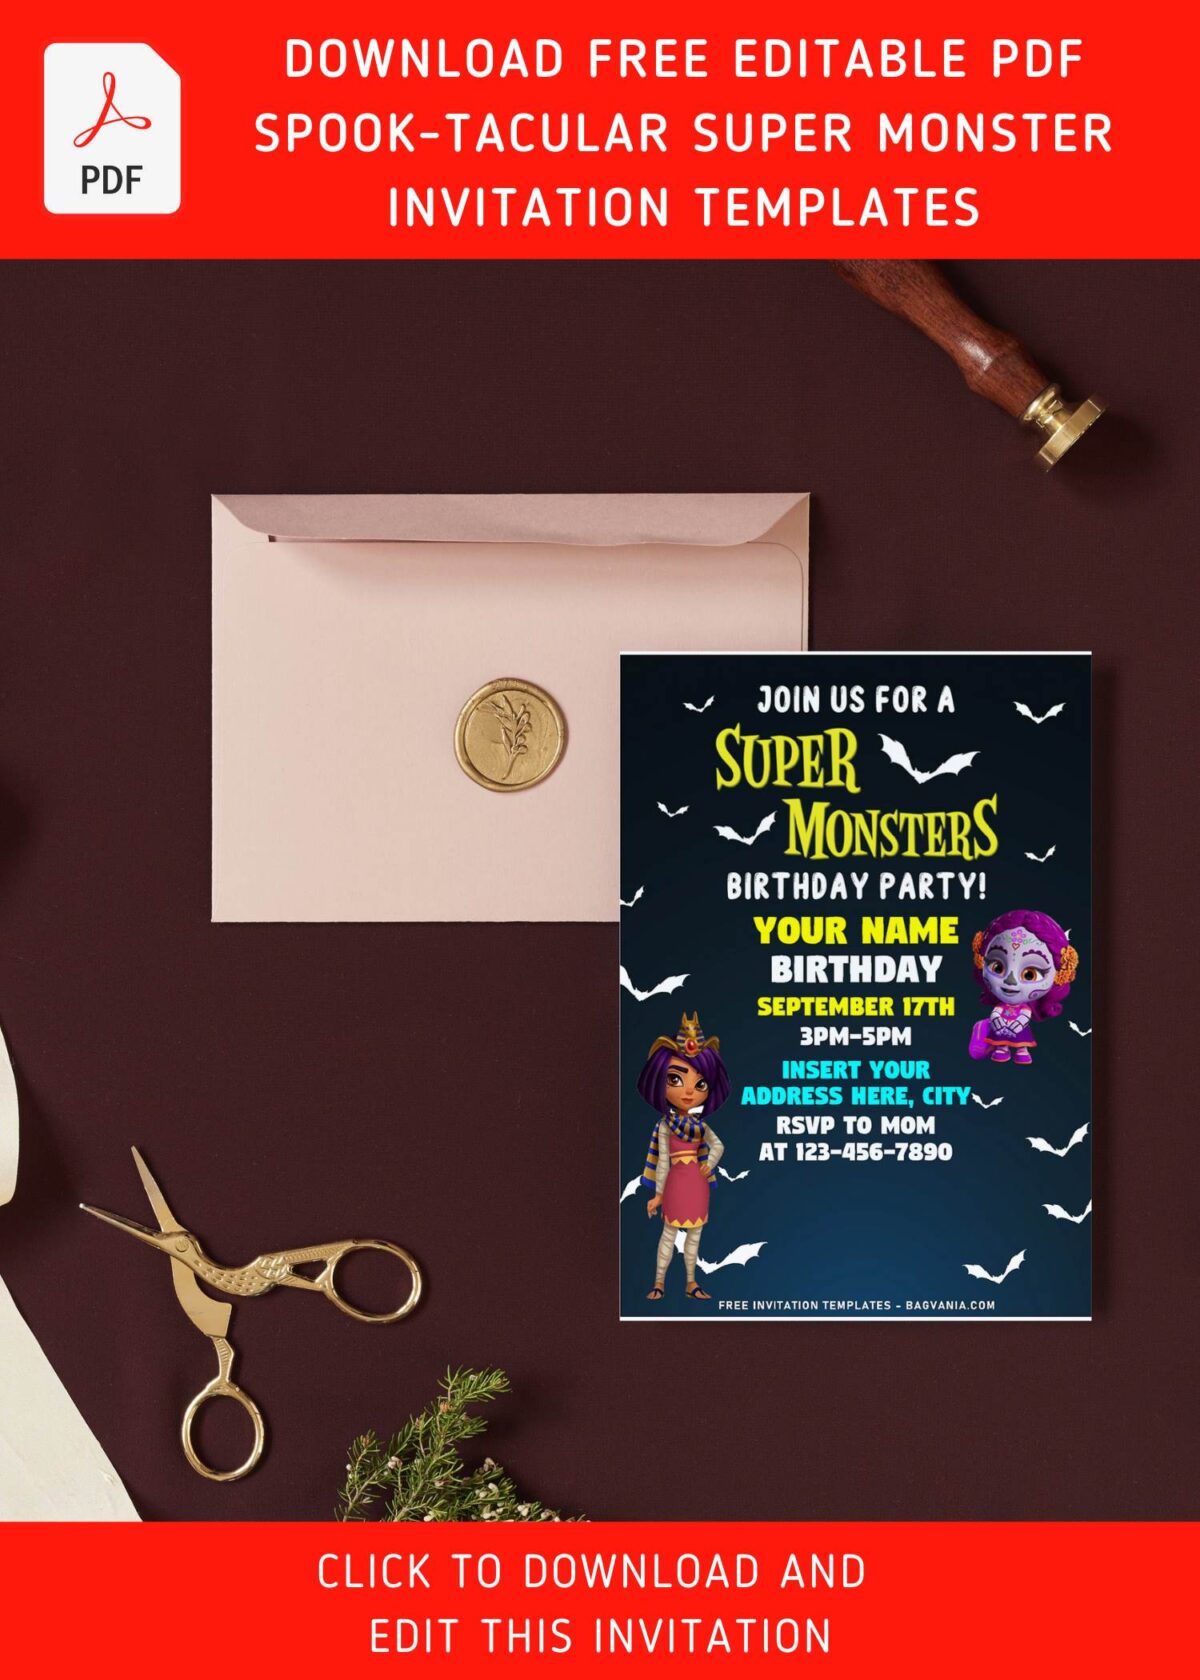 (Free Editable PDF) Spooktacular Super Monster Birthday Invitation Templates with portrait design